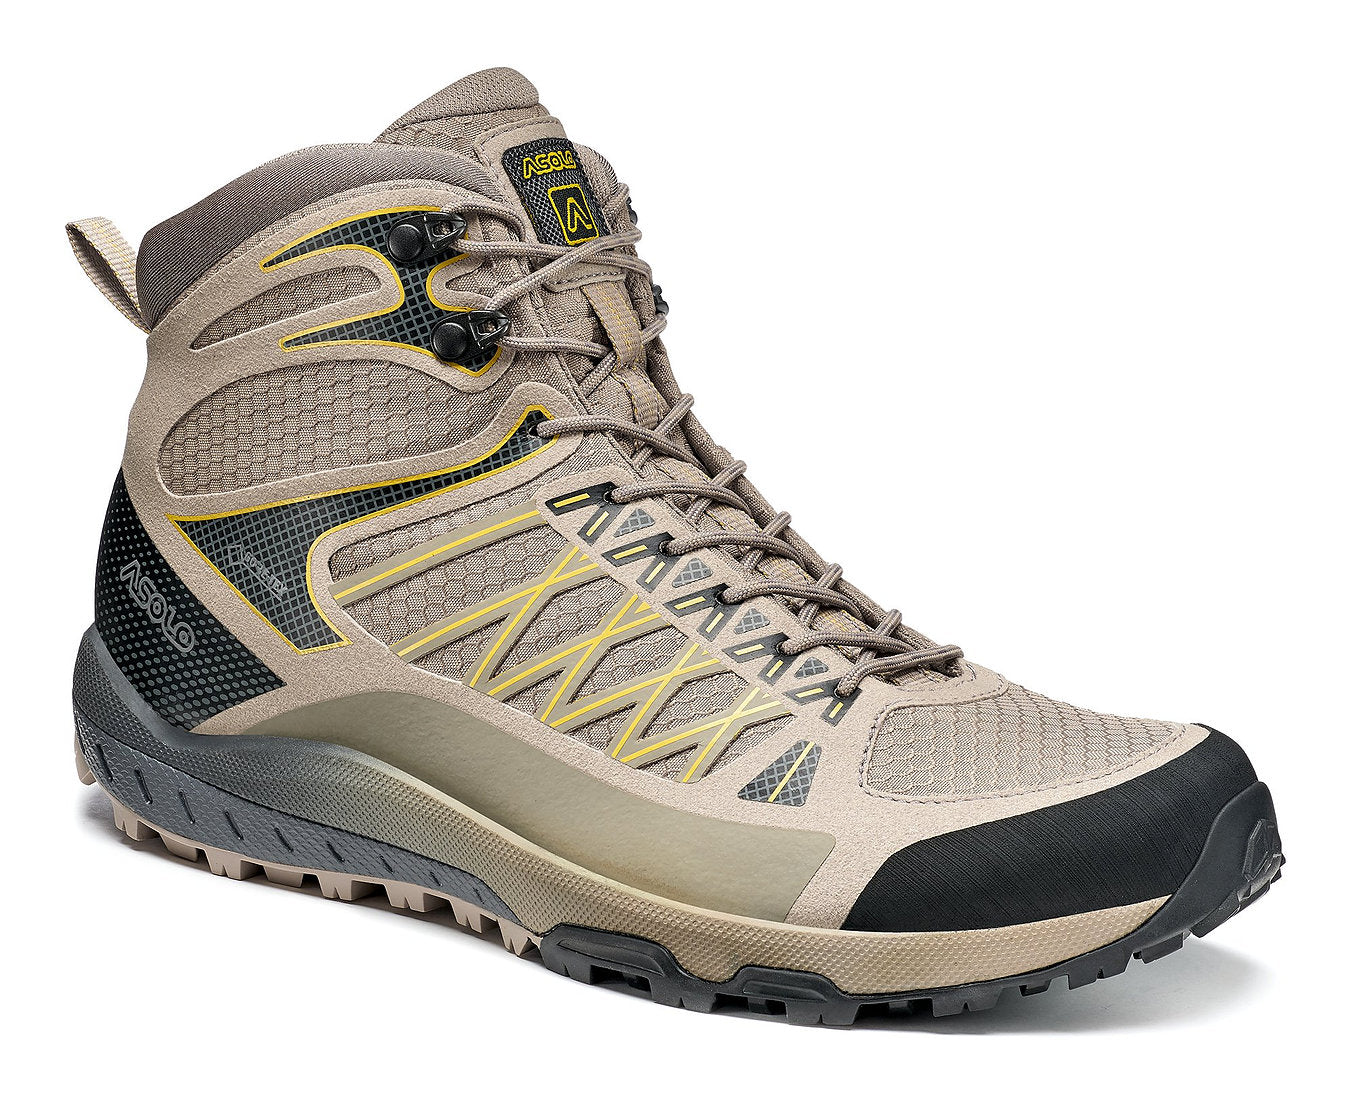 Women's Hiking Boots & Shoes – Adventure Shop